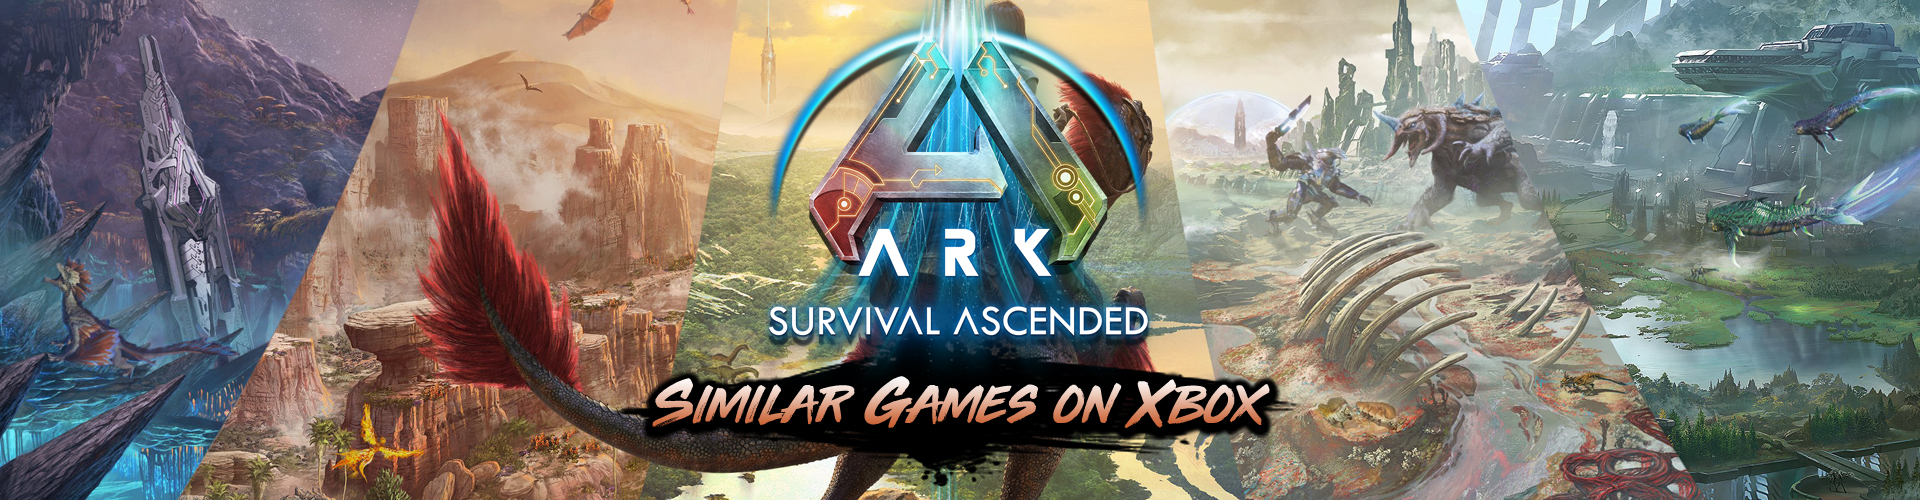 Xbox Games Like ARK Survival Ascended